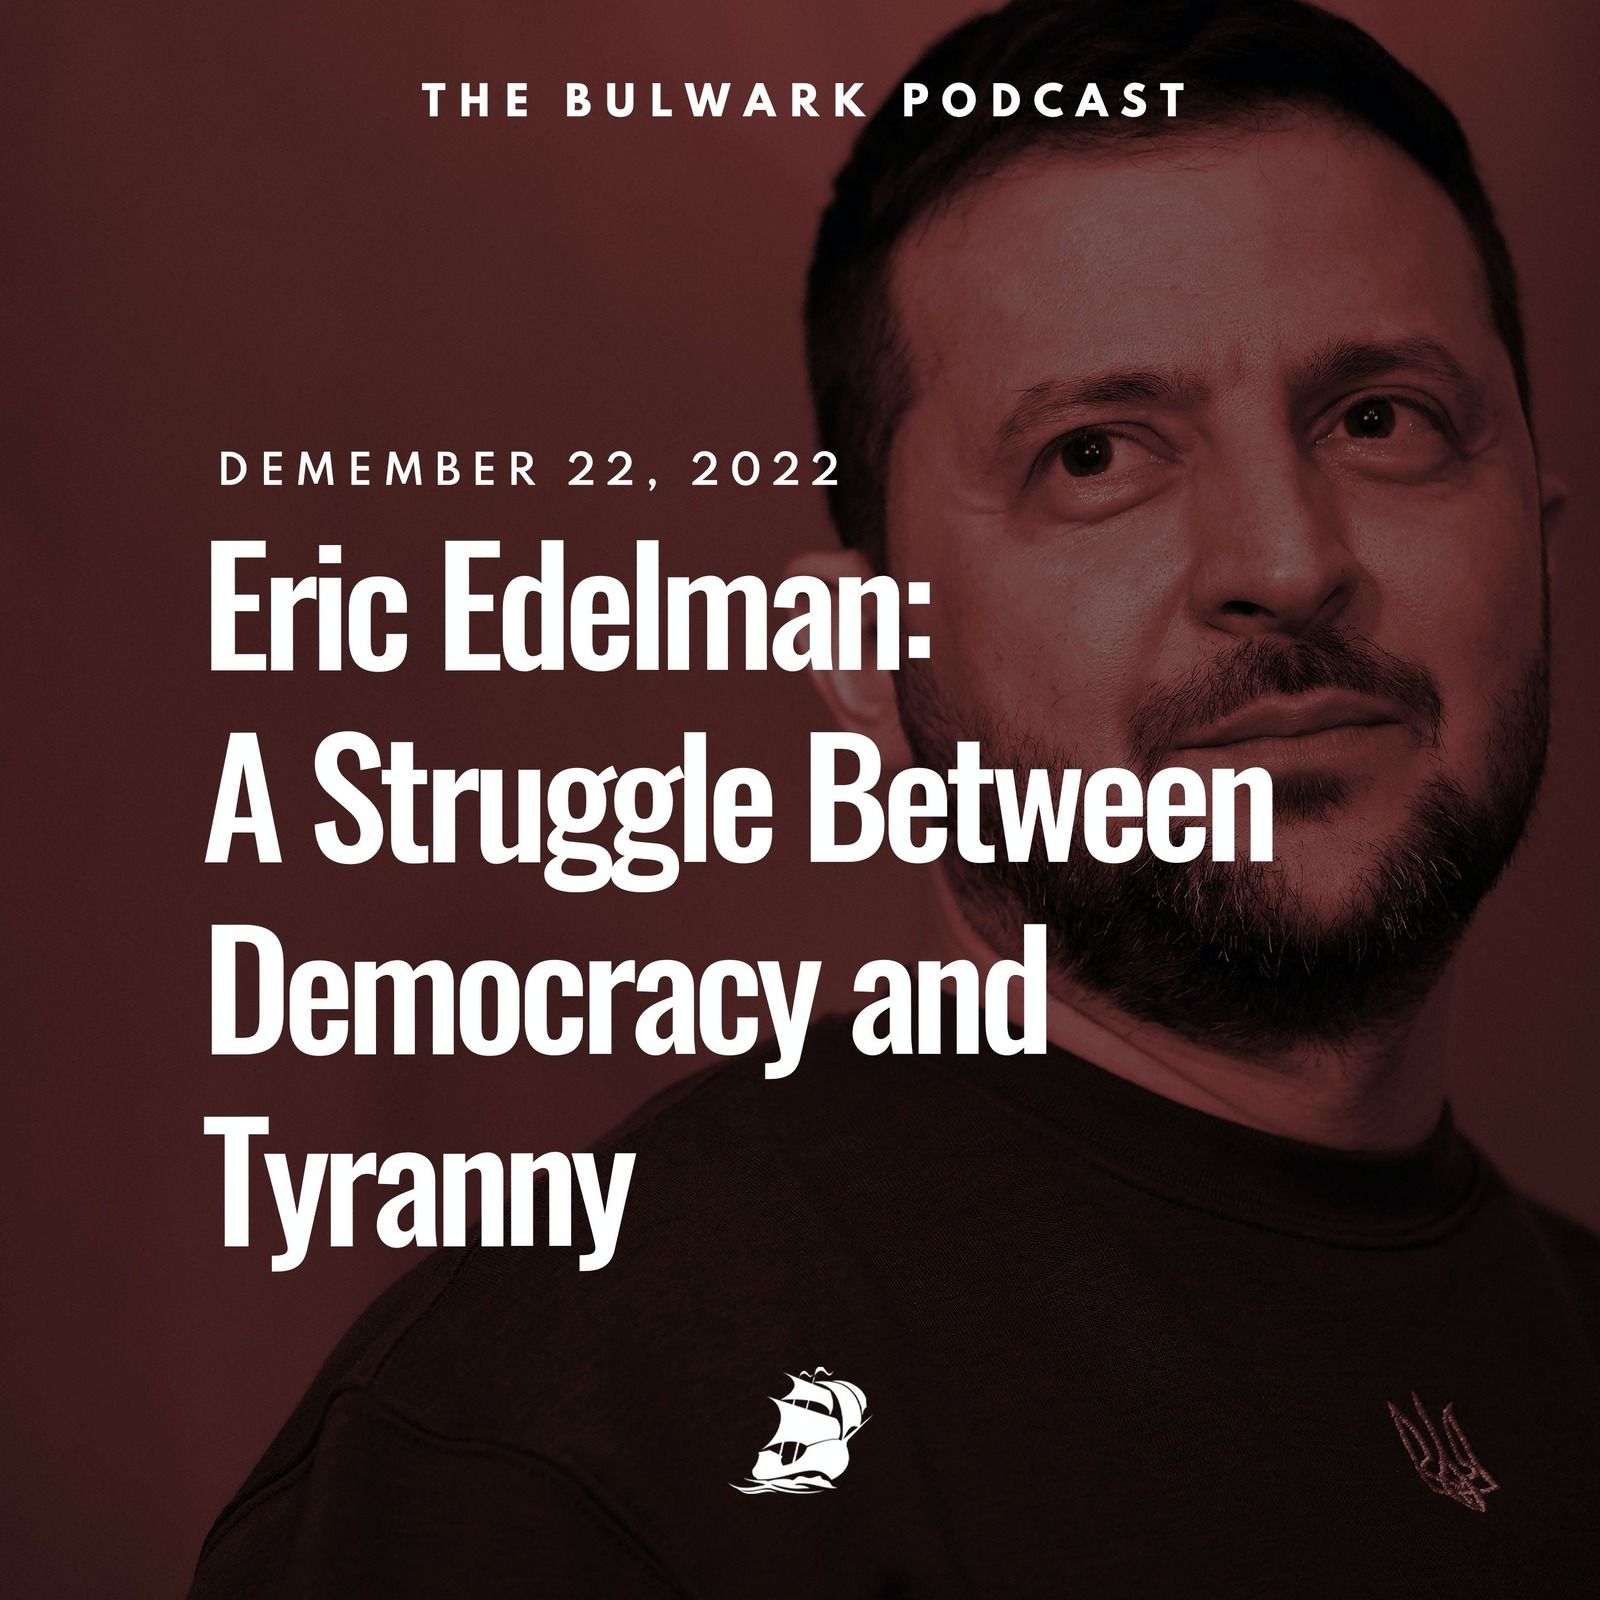 Eric Edelman: A Struggle Between Democracy and Tyranny by The Bulwark Podcast